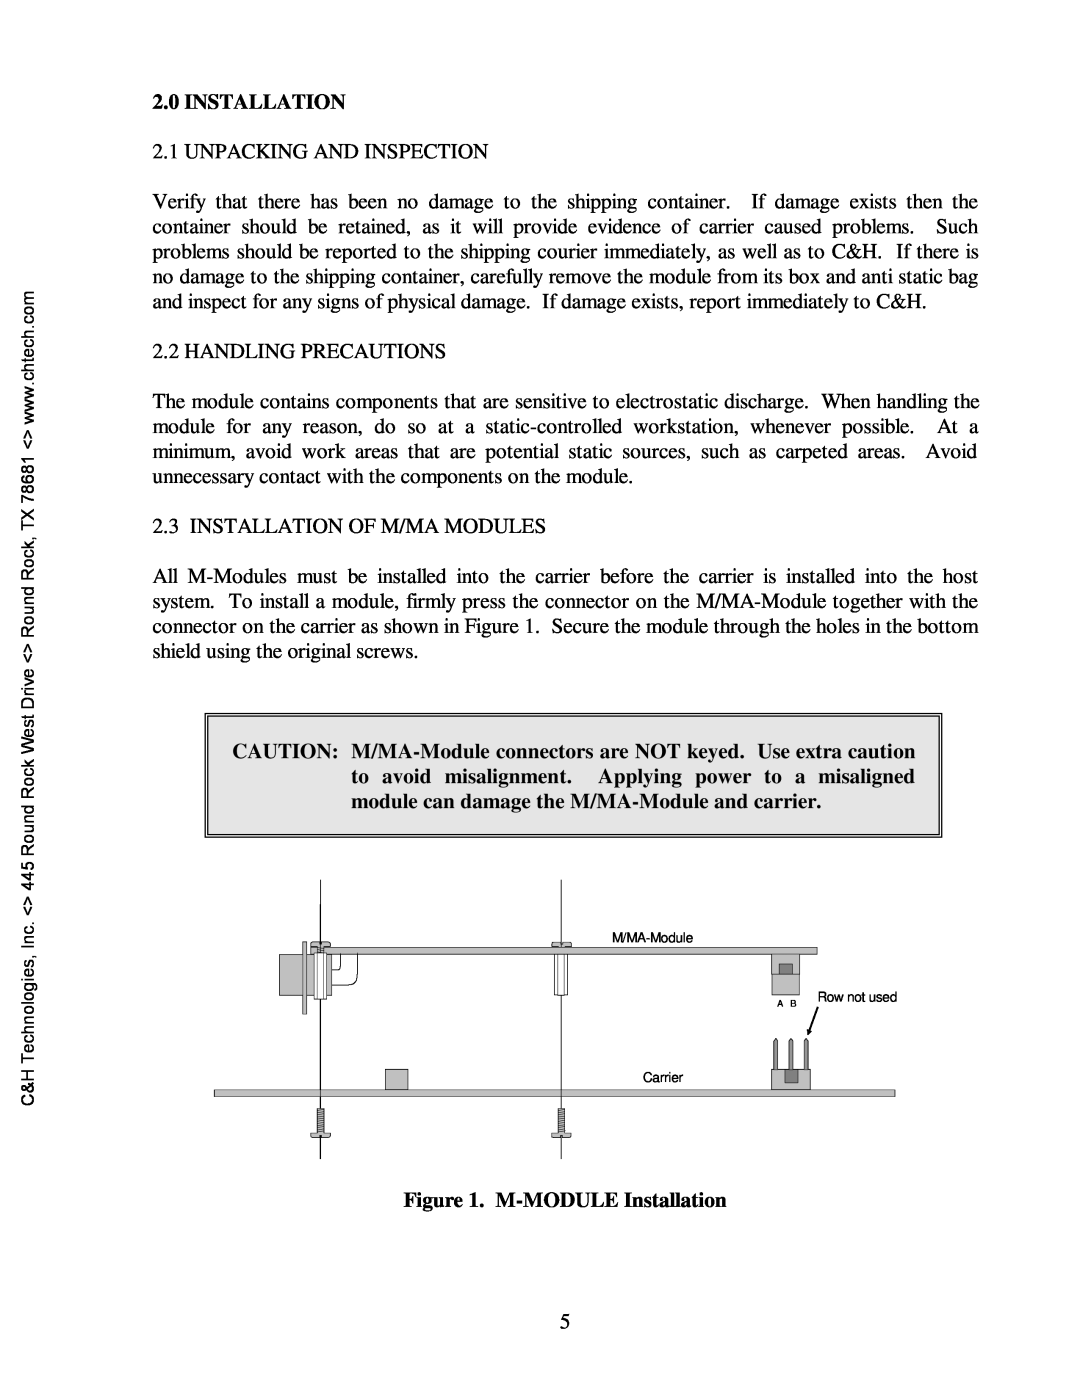 CH Tech M222 user manual M-MODULE Installation, M/MA-Module, Carrier 